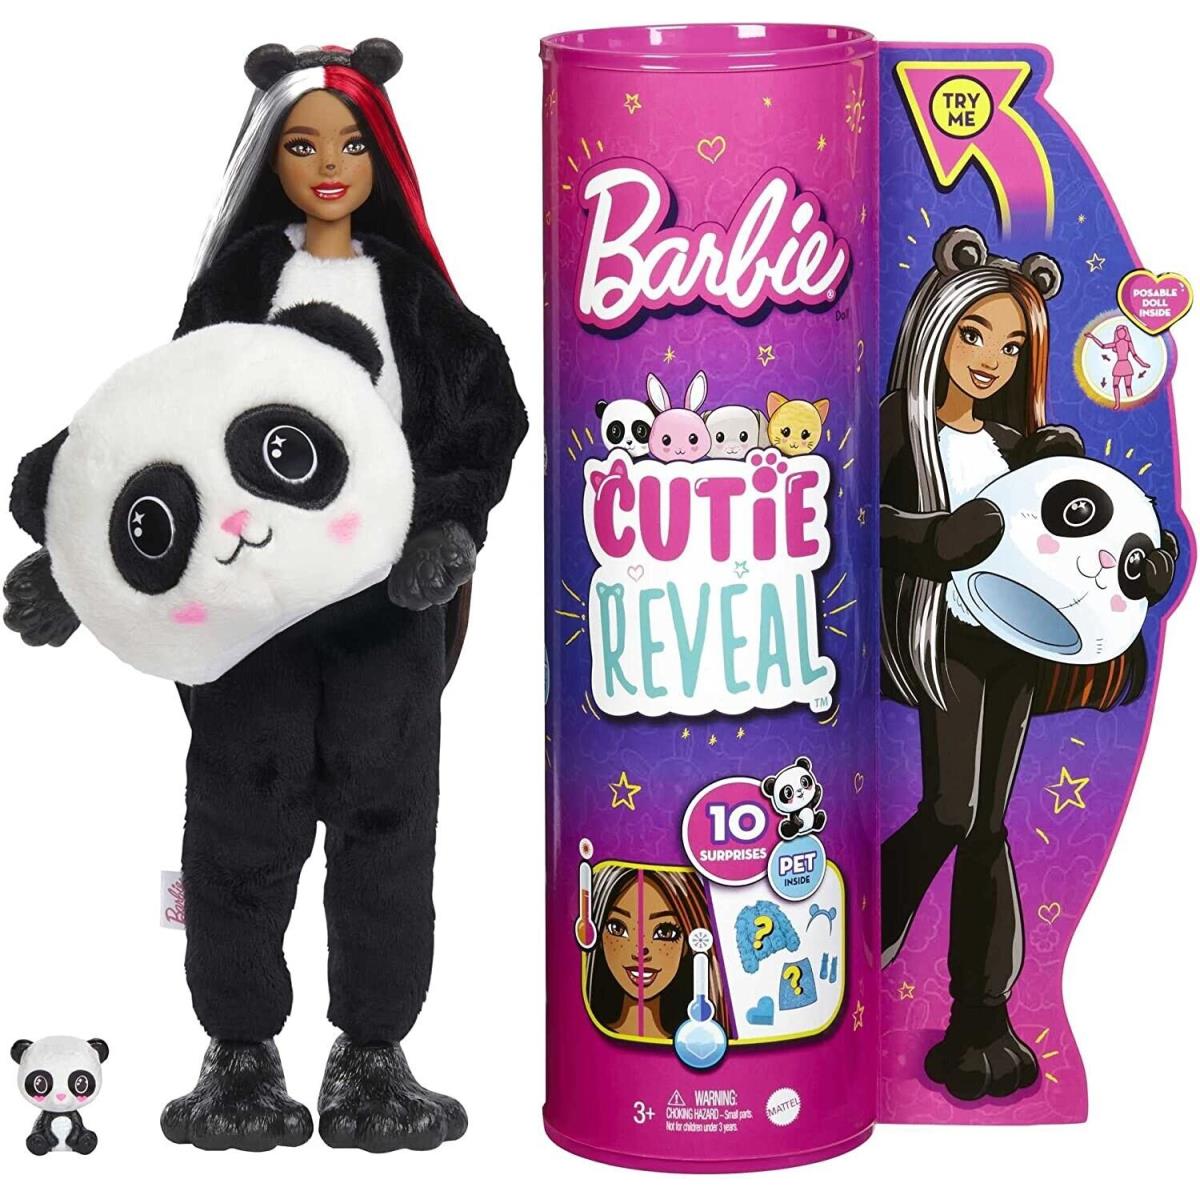 Barbie Cutie Reveal Doll with Panda Plush Costume 10 Surprises